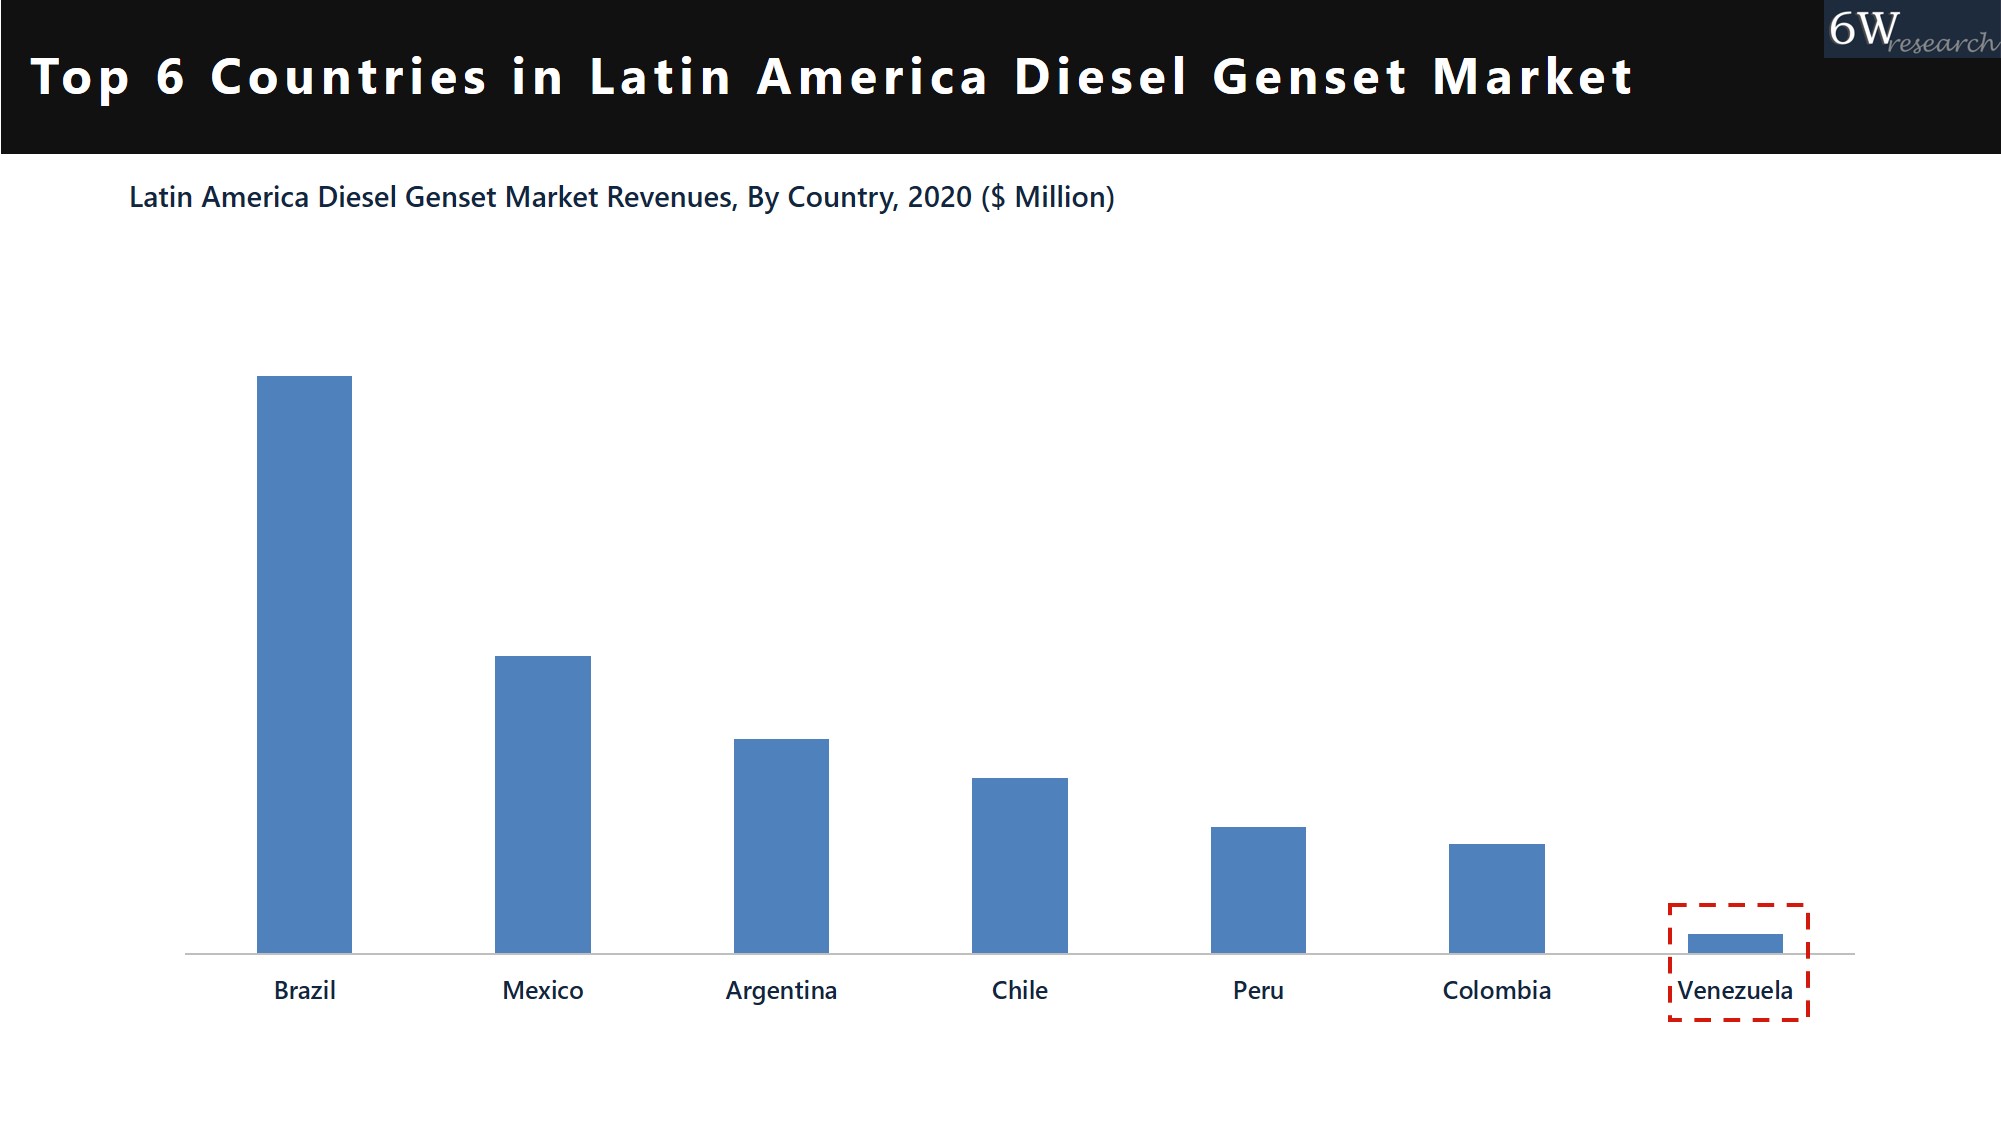 Venezuela Diesel Genset Market